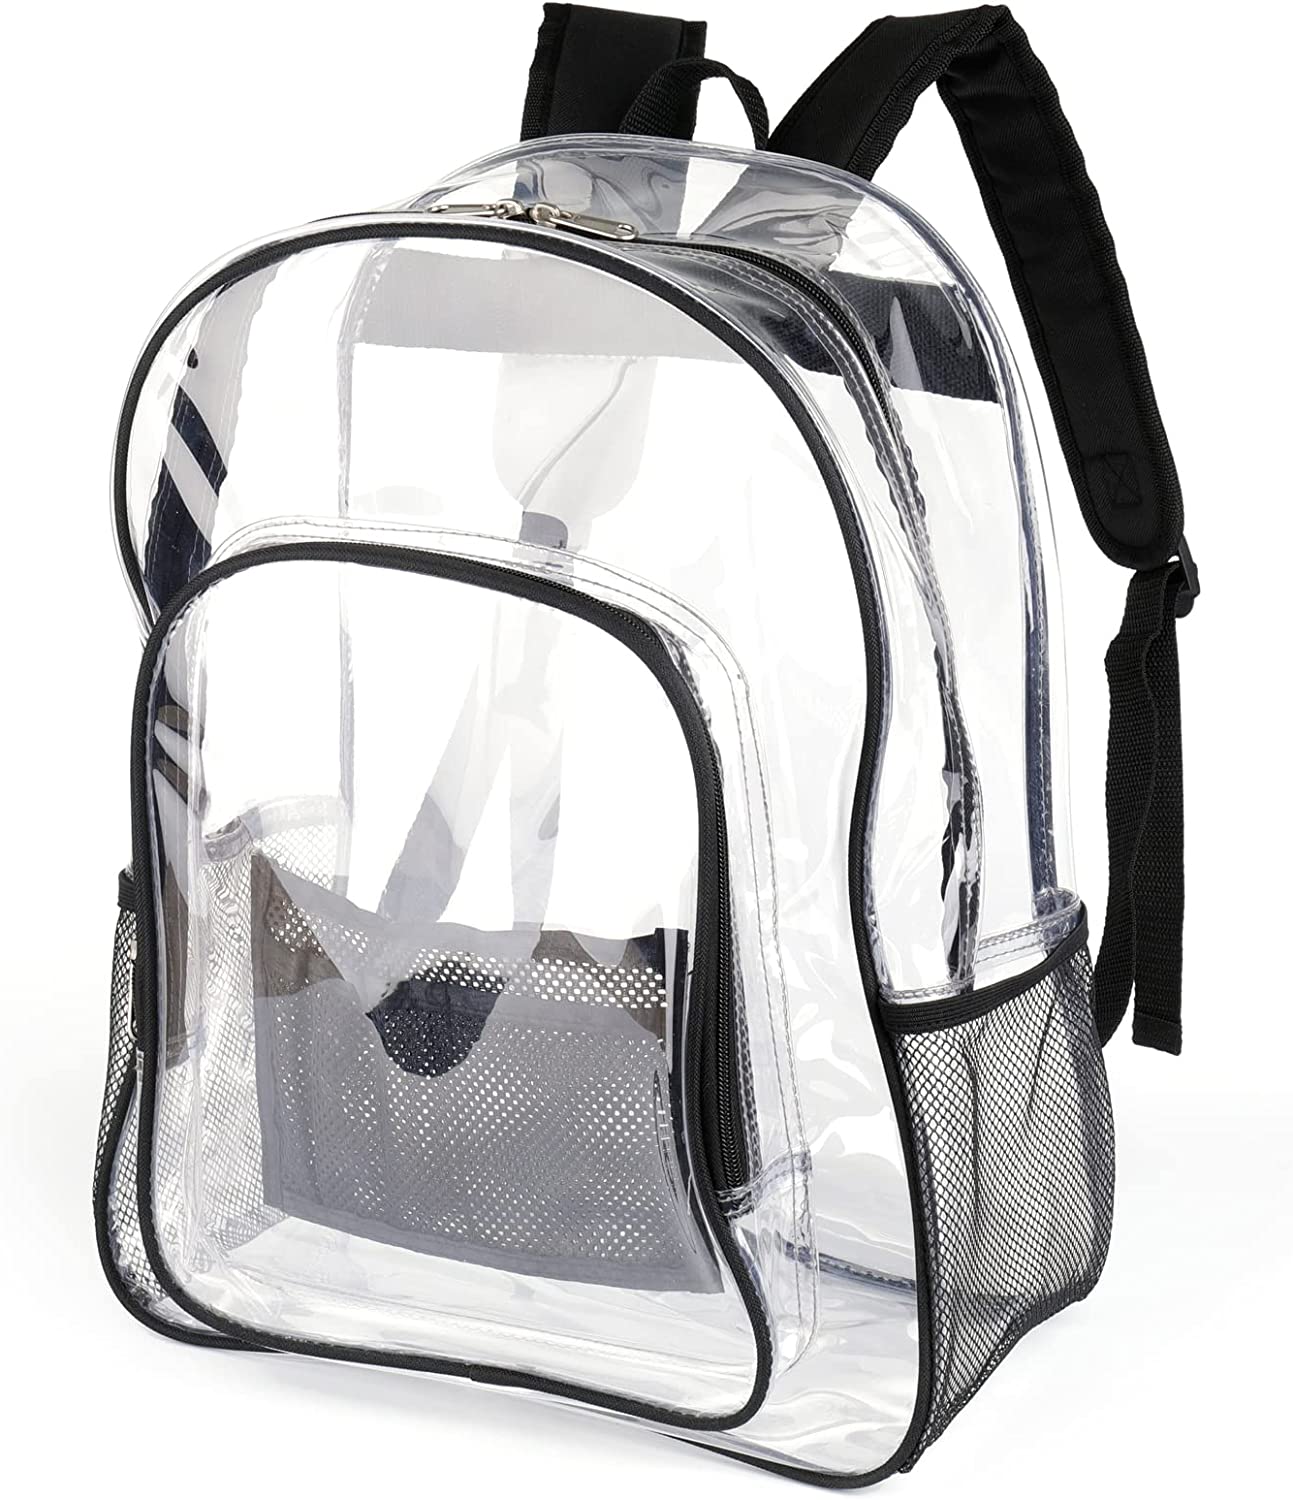 Clear Backpack, Plastic Backpack, Bookbags for School